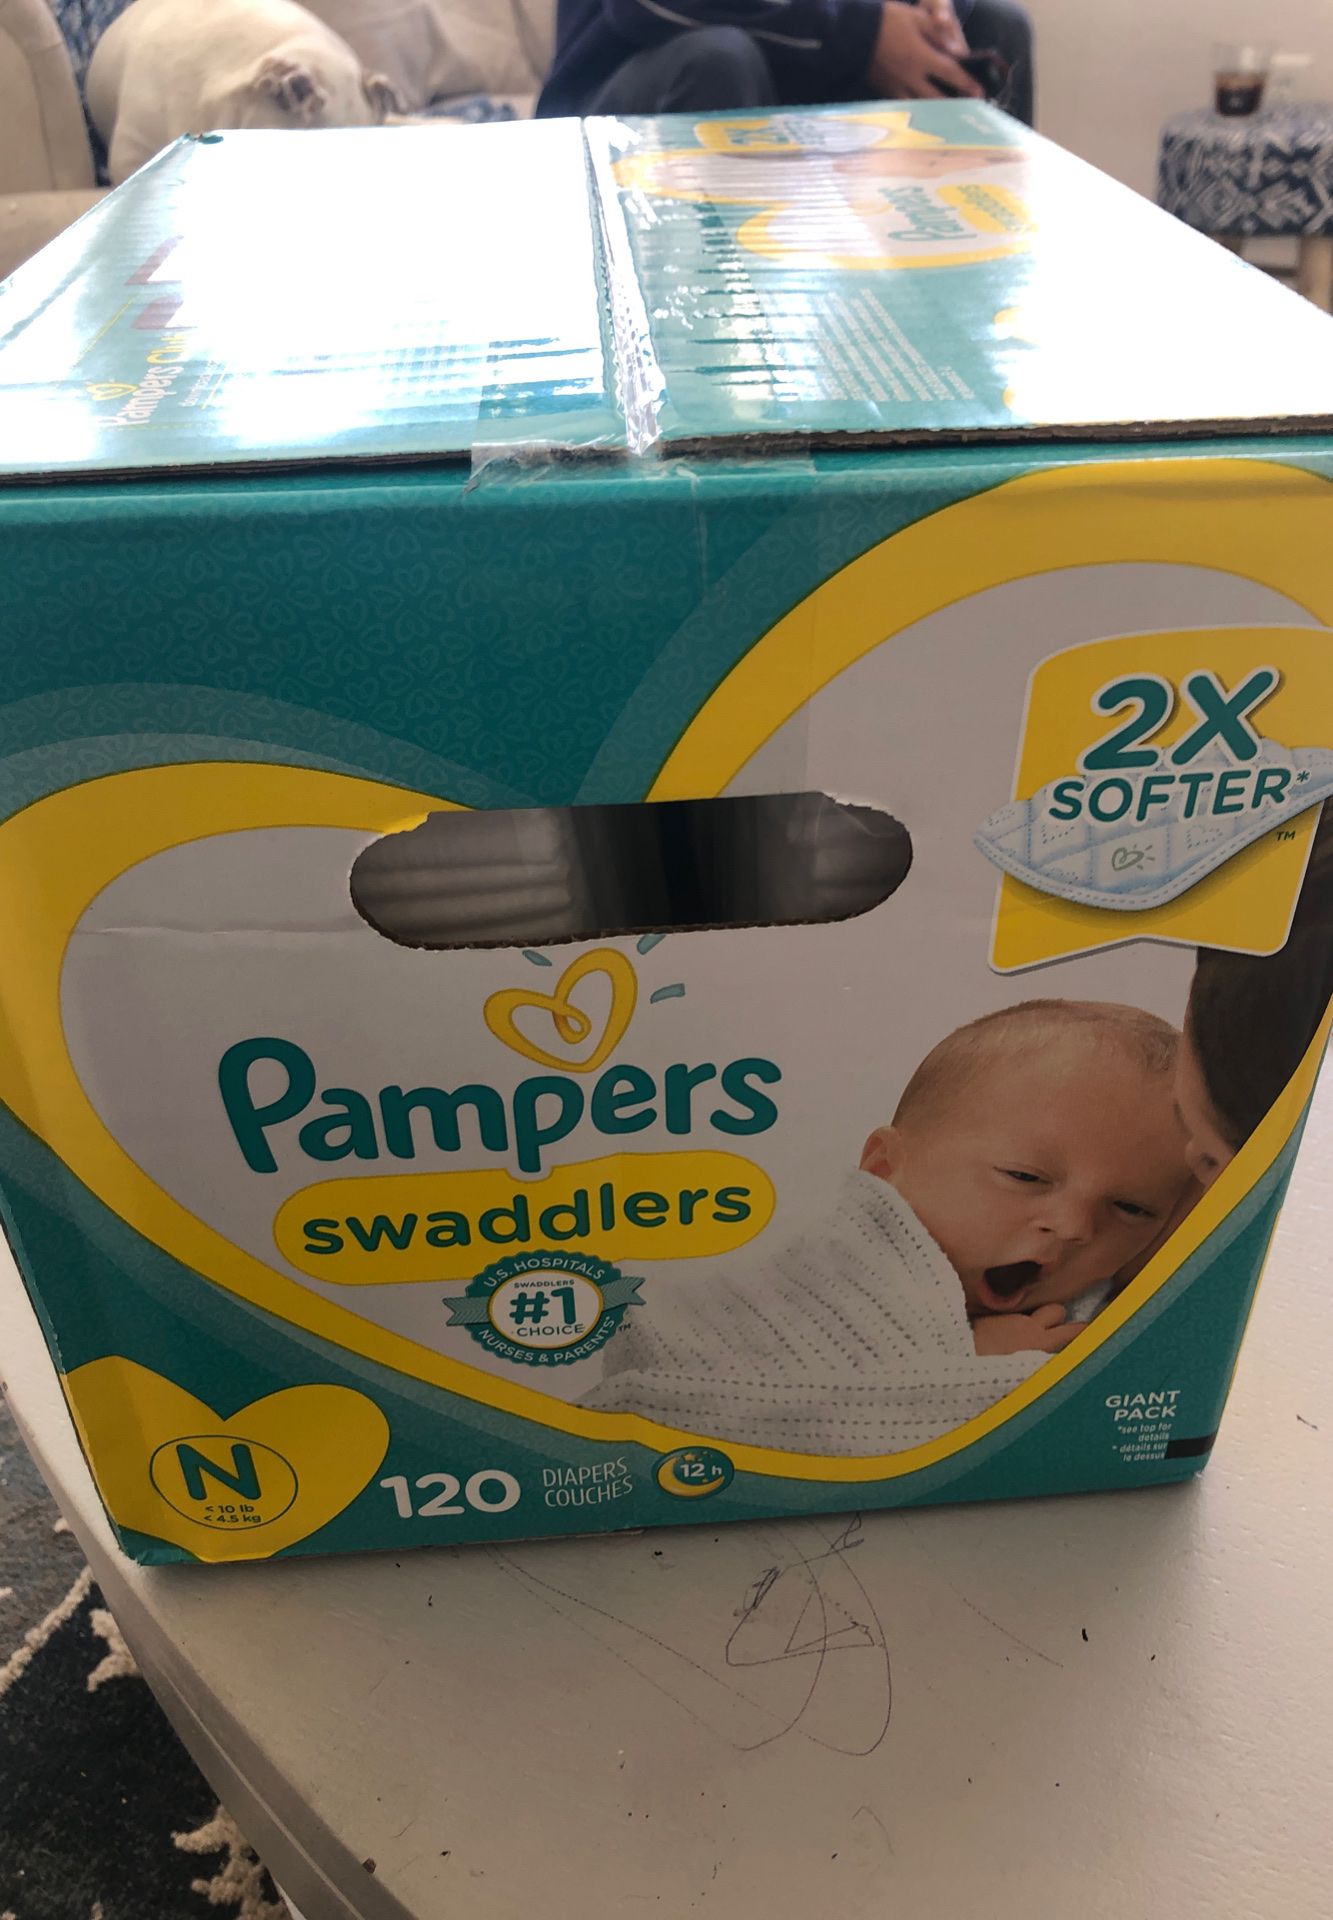 Brand new case of newborn pampers